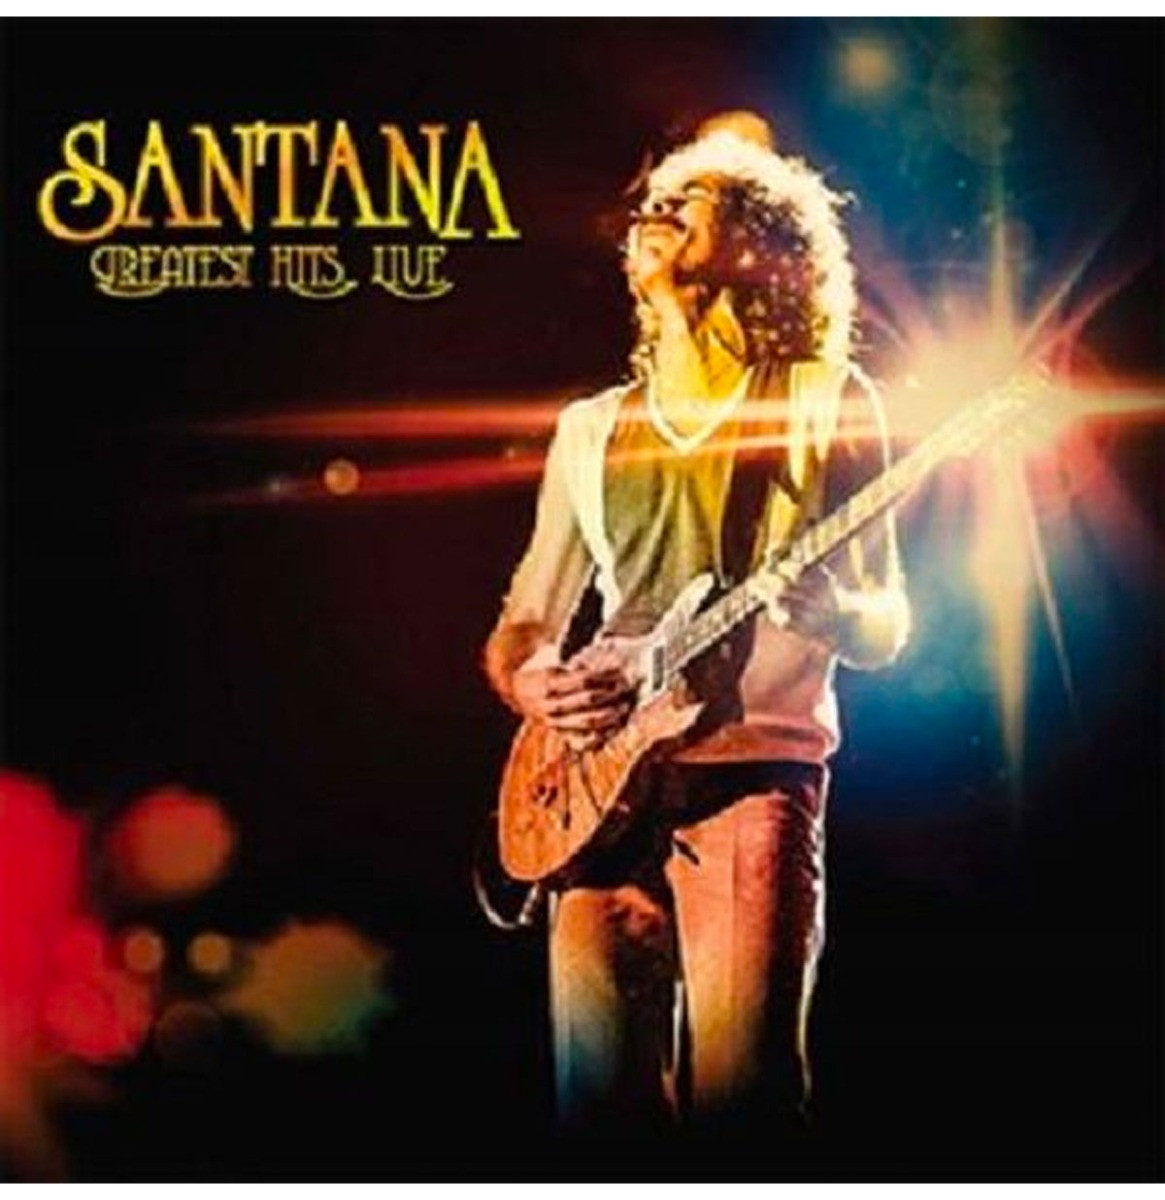 Santana - Greatest Hits... Live (Virgin Vinyl) LP